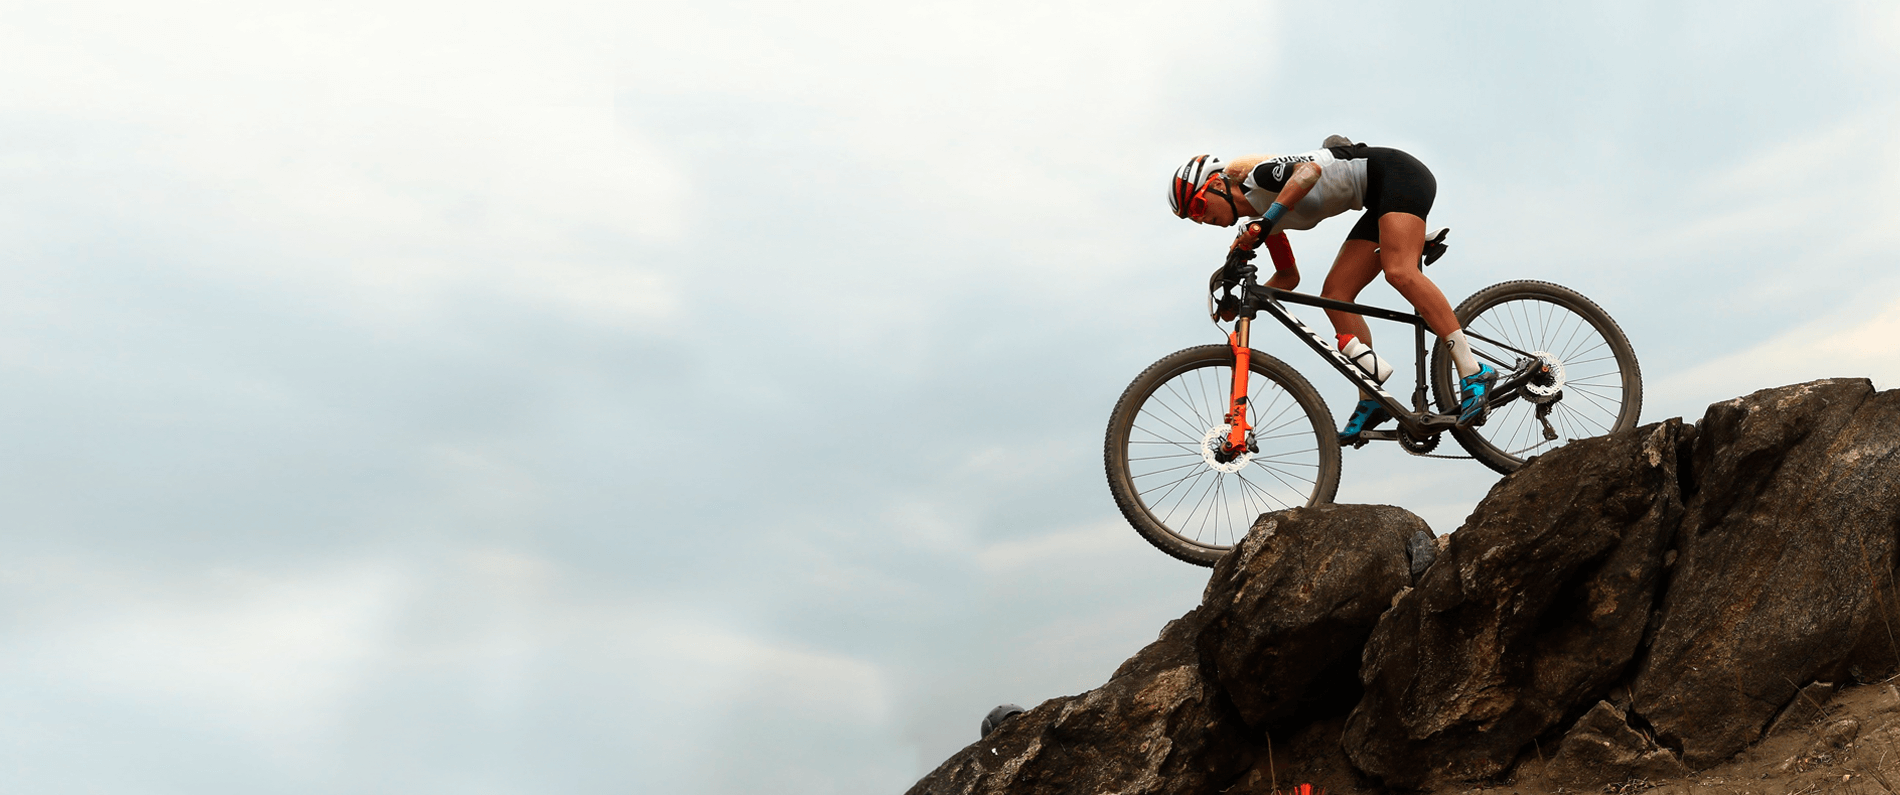 Ciclismo de montaña  Juegos Panamericanos Lima 2019